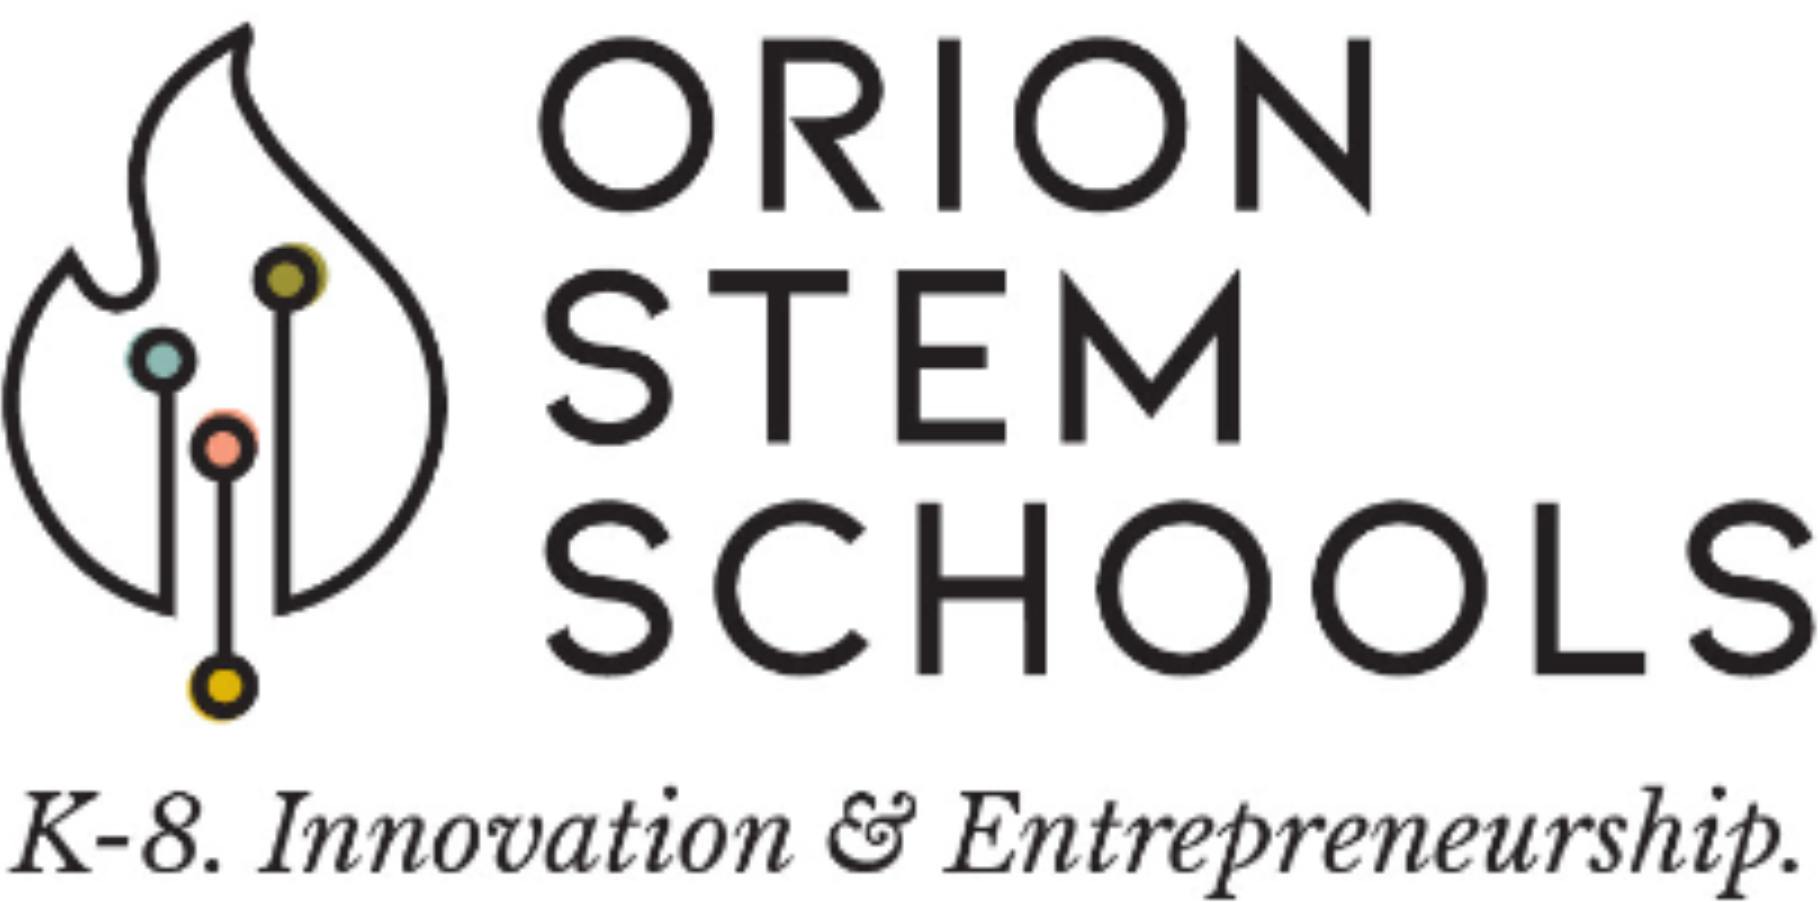 Orion STEM Schools